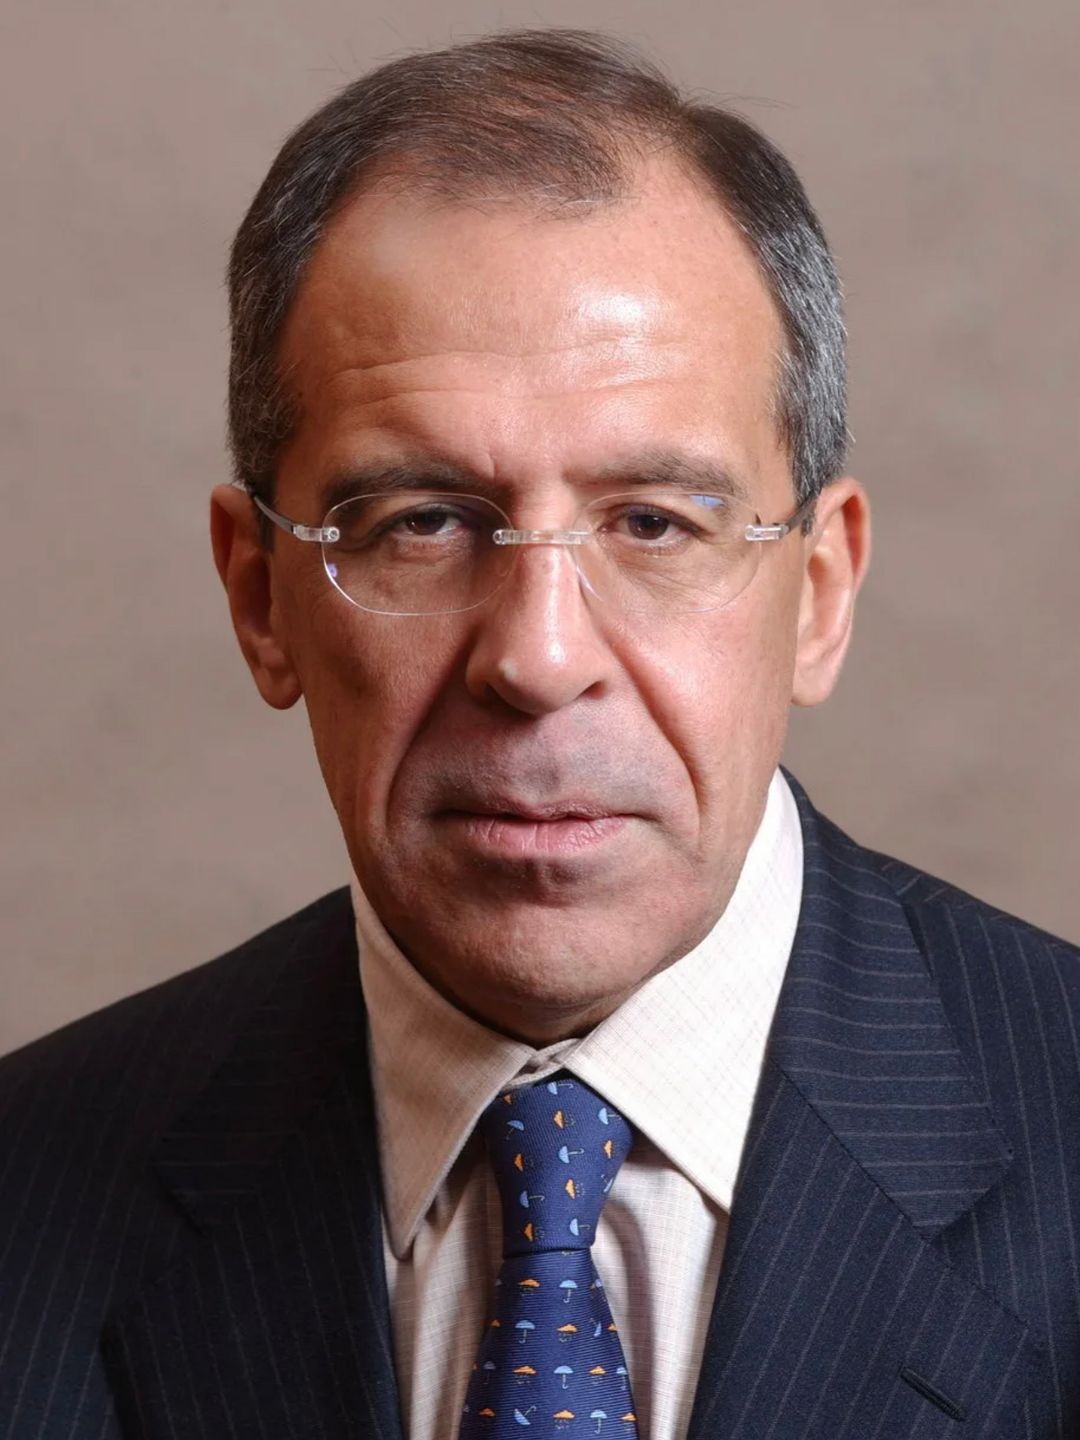 Sergey Lavrov main achievements